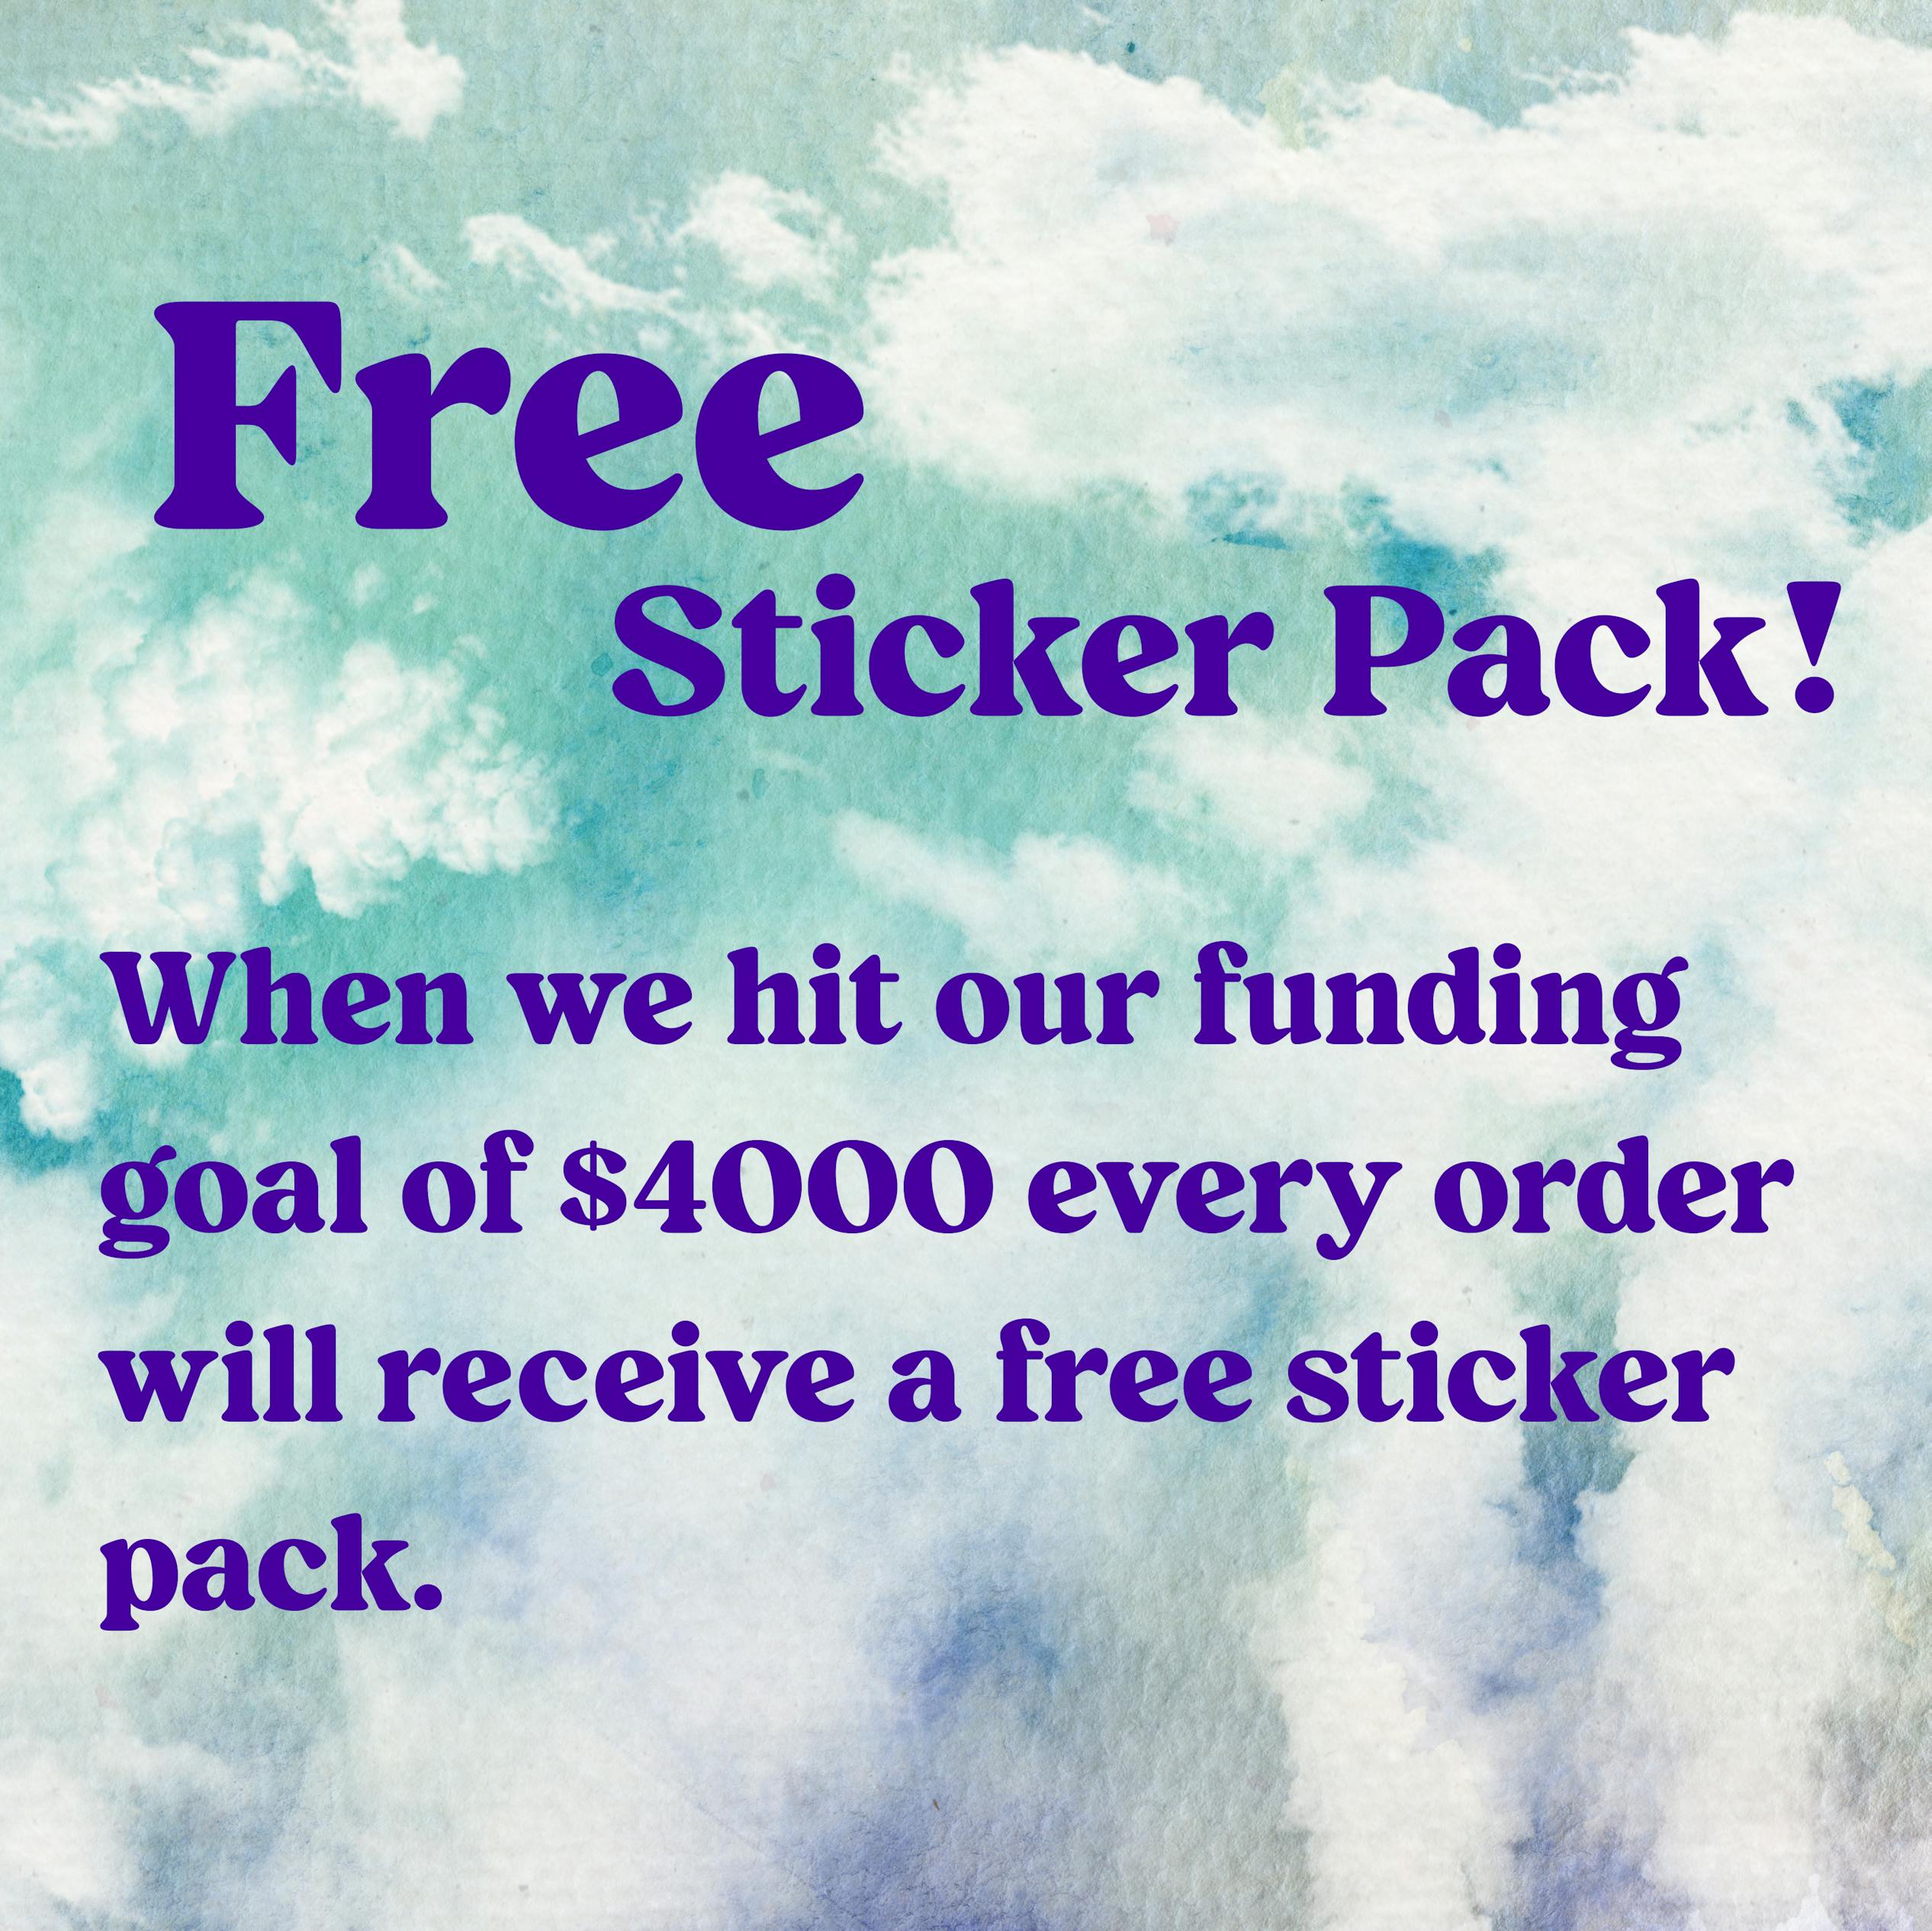 Freebie Sticker Pack!